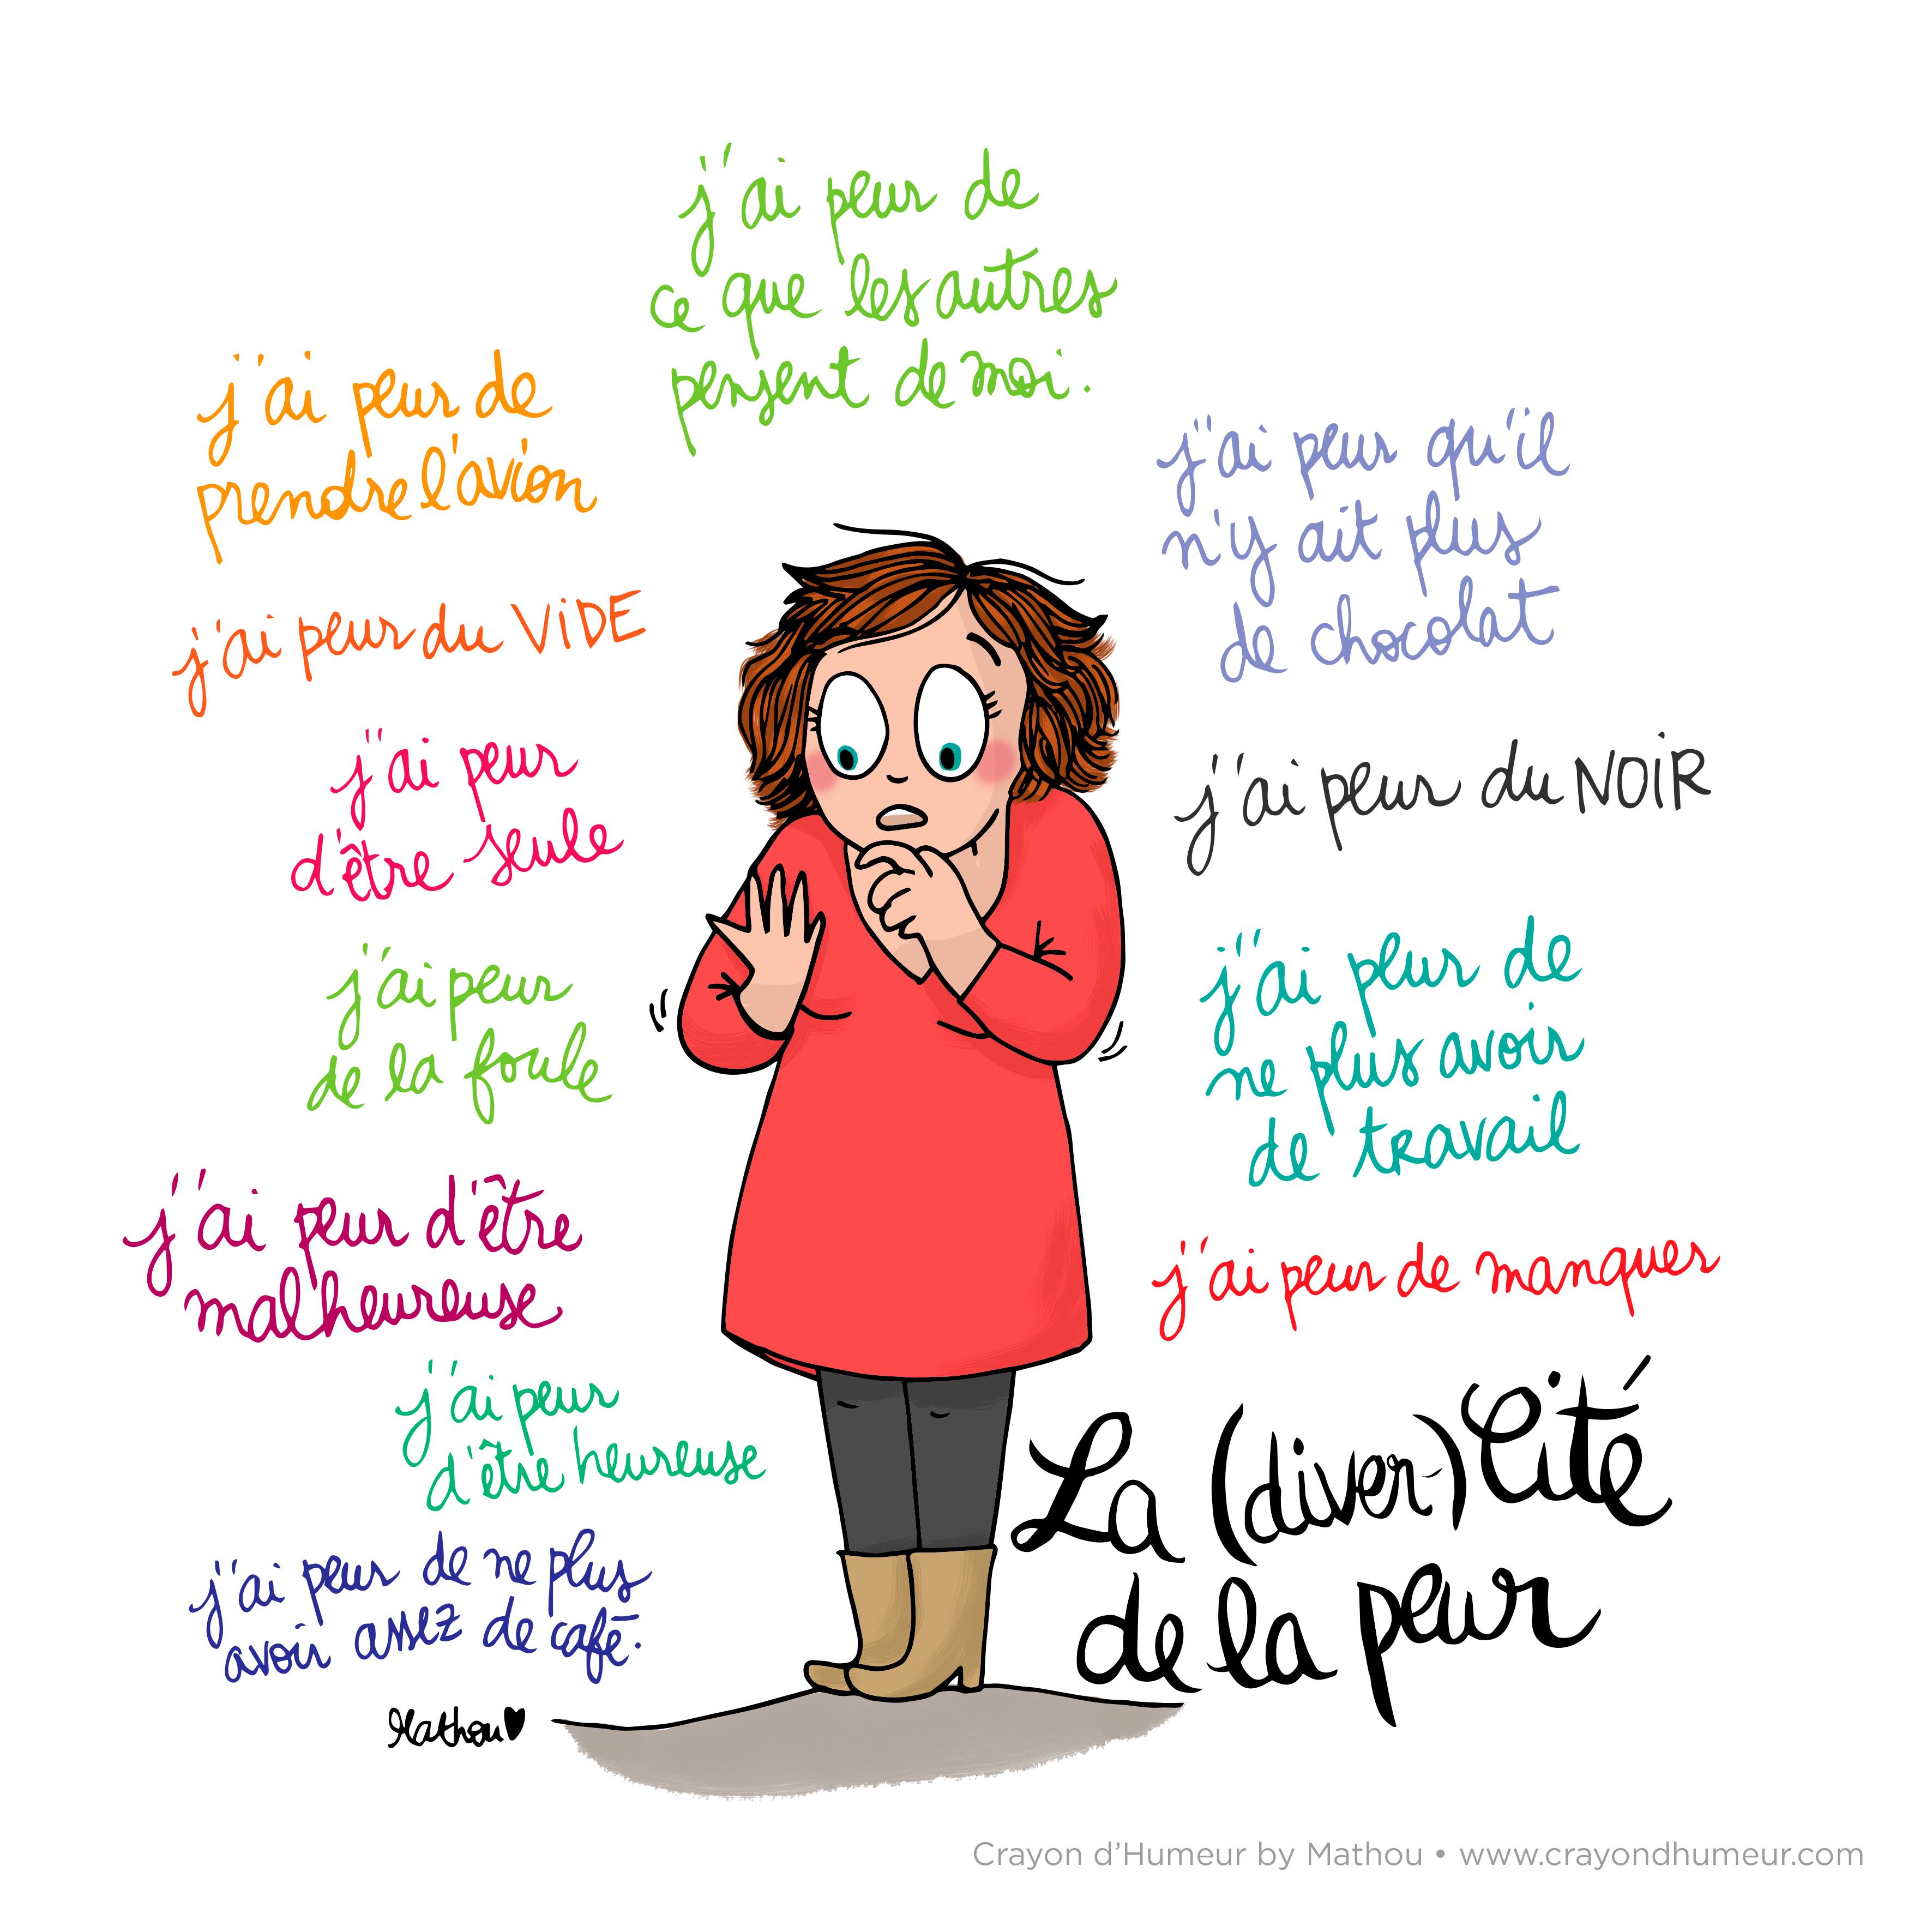 Mathou Virfollet on Twitter: "{ FAIS-MOI PEUR } #mathou #illustration  #dessin #Humour #peur #angoisse #compter http://t.co/SEpmWCHyte" / Twitter